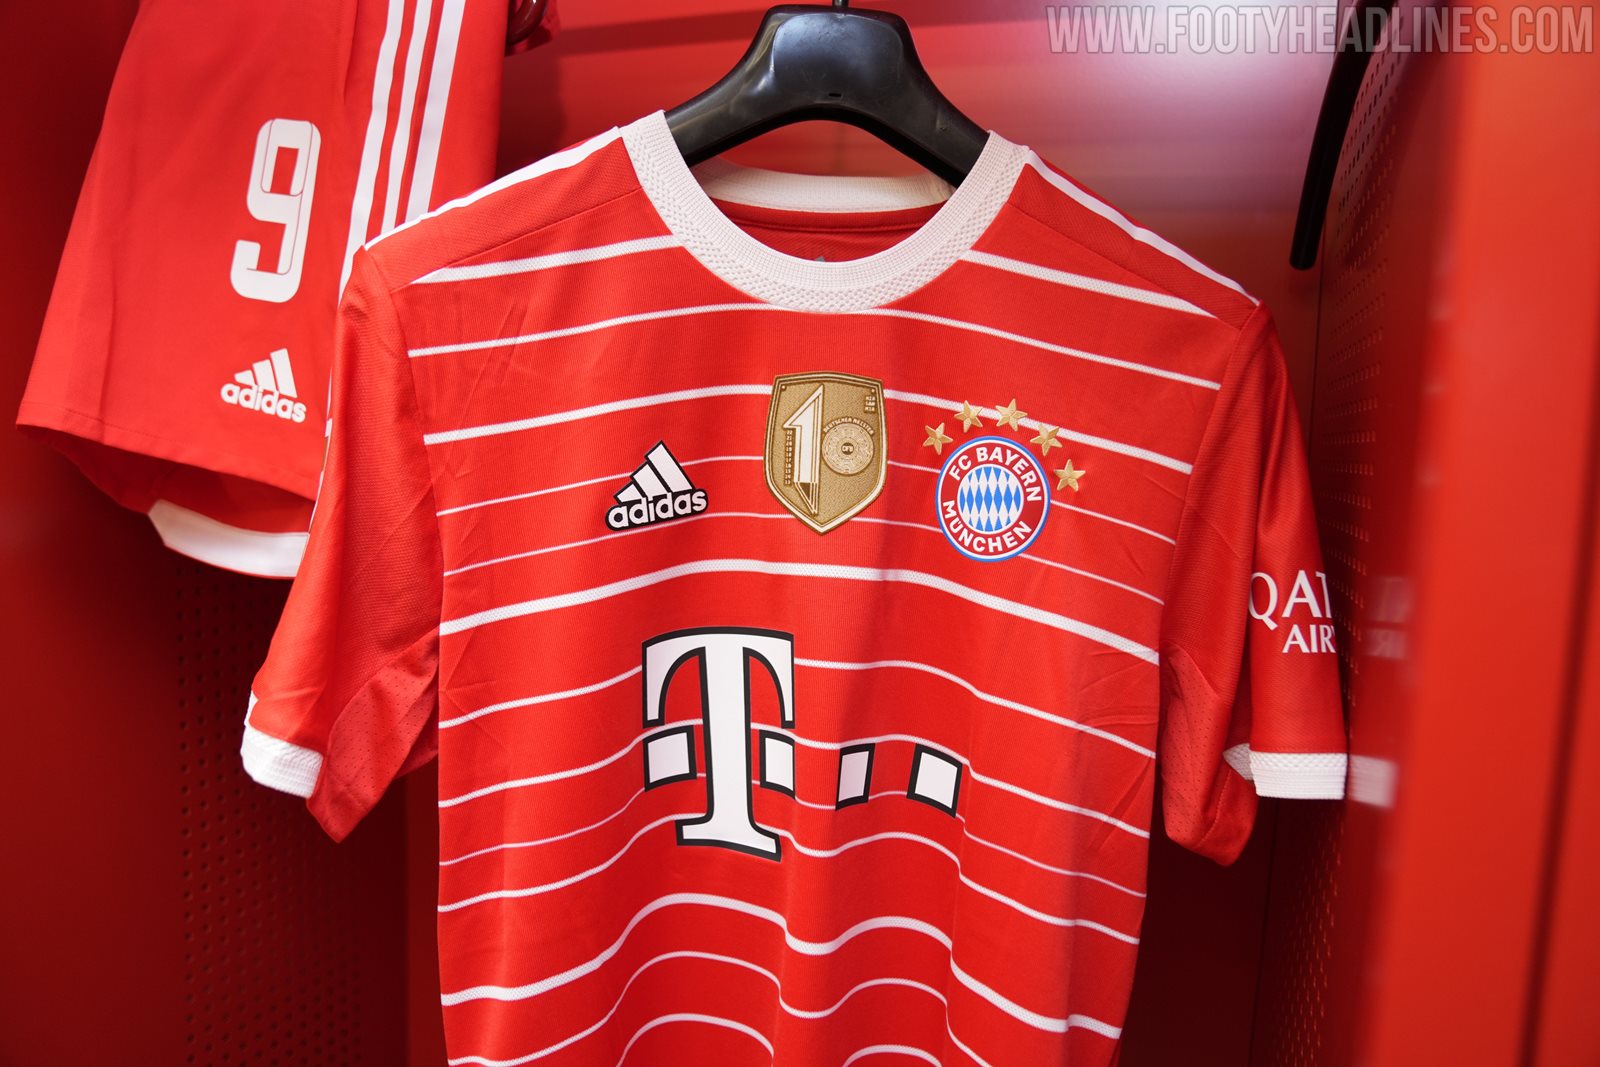 levenslang Leggen room Bayern München 22-23 Home Kit Released - Footy Headlines